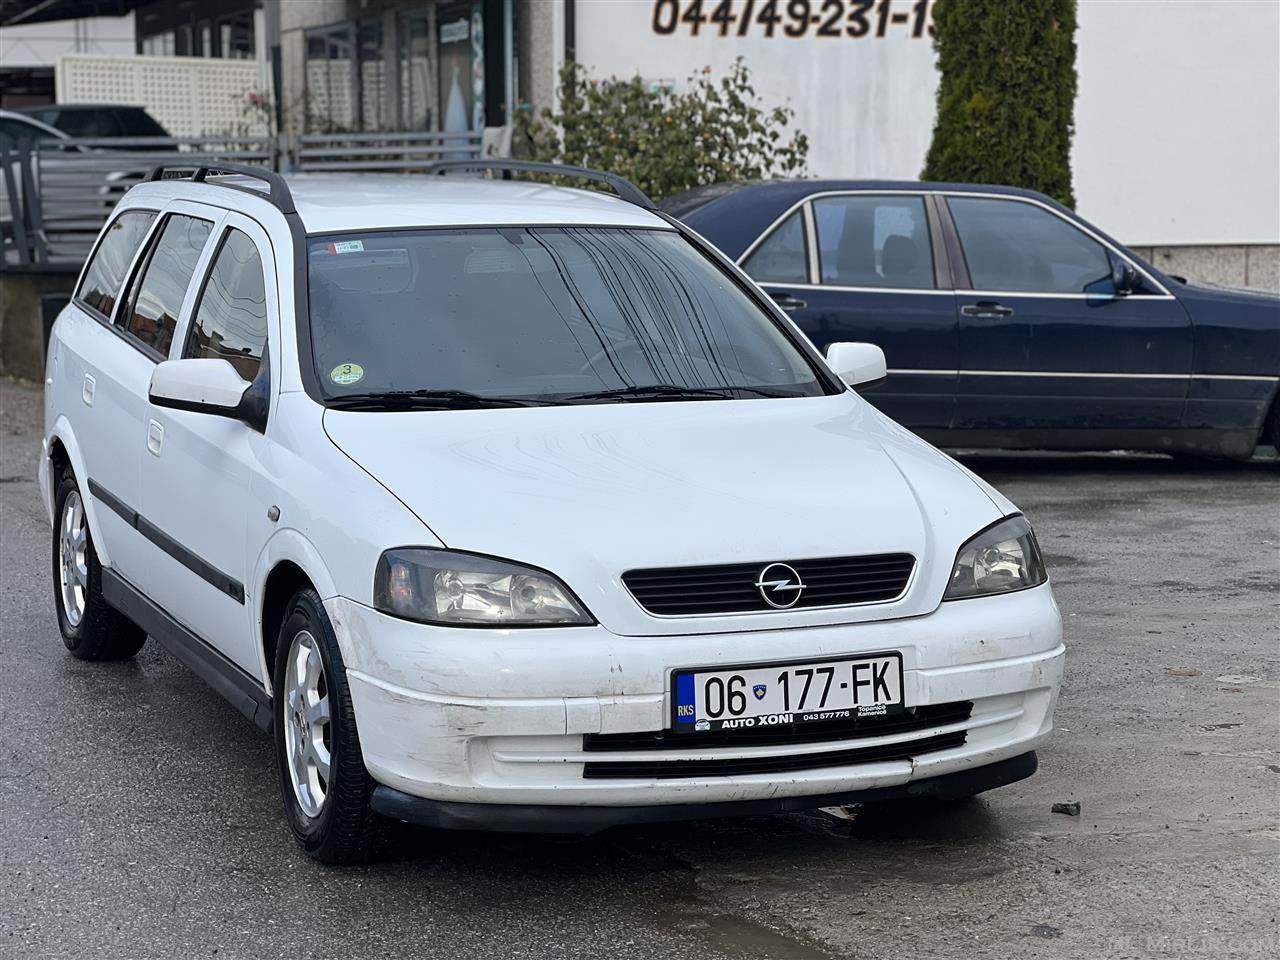 Opel Astra G 1.7 DTI V.p2002 Rks 